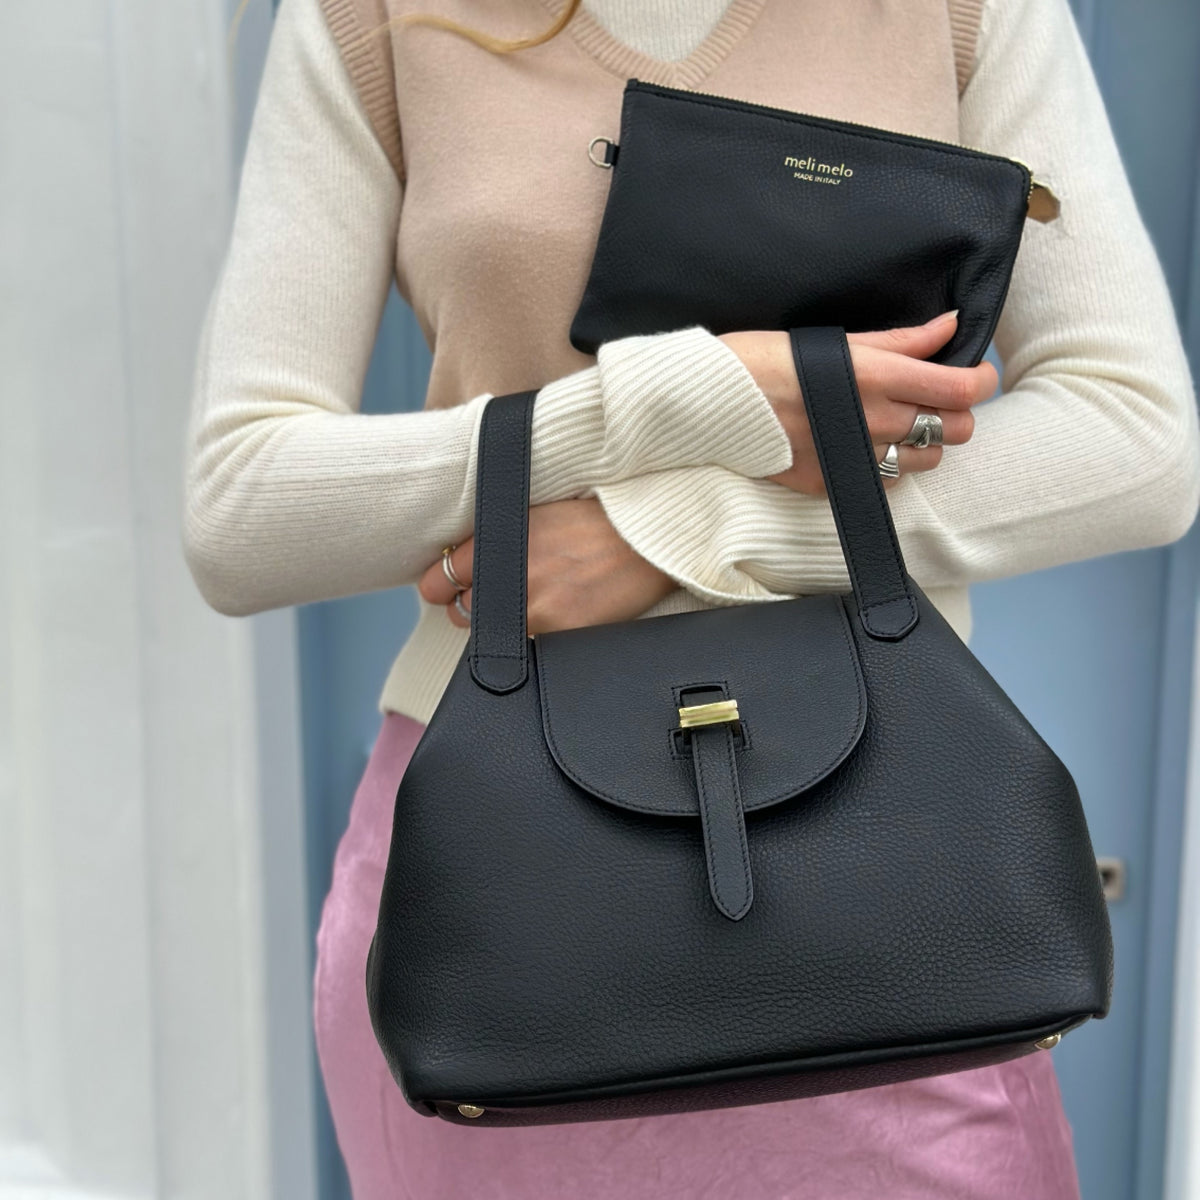 BNew & Authentic Meli Melo Thela - Italian Leather Bag, Luxury